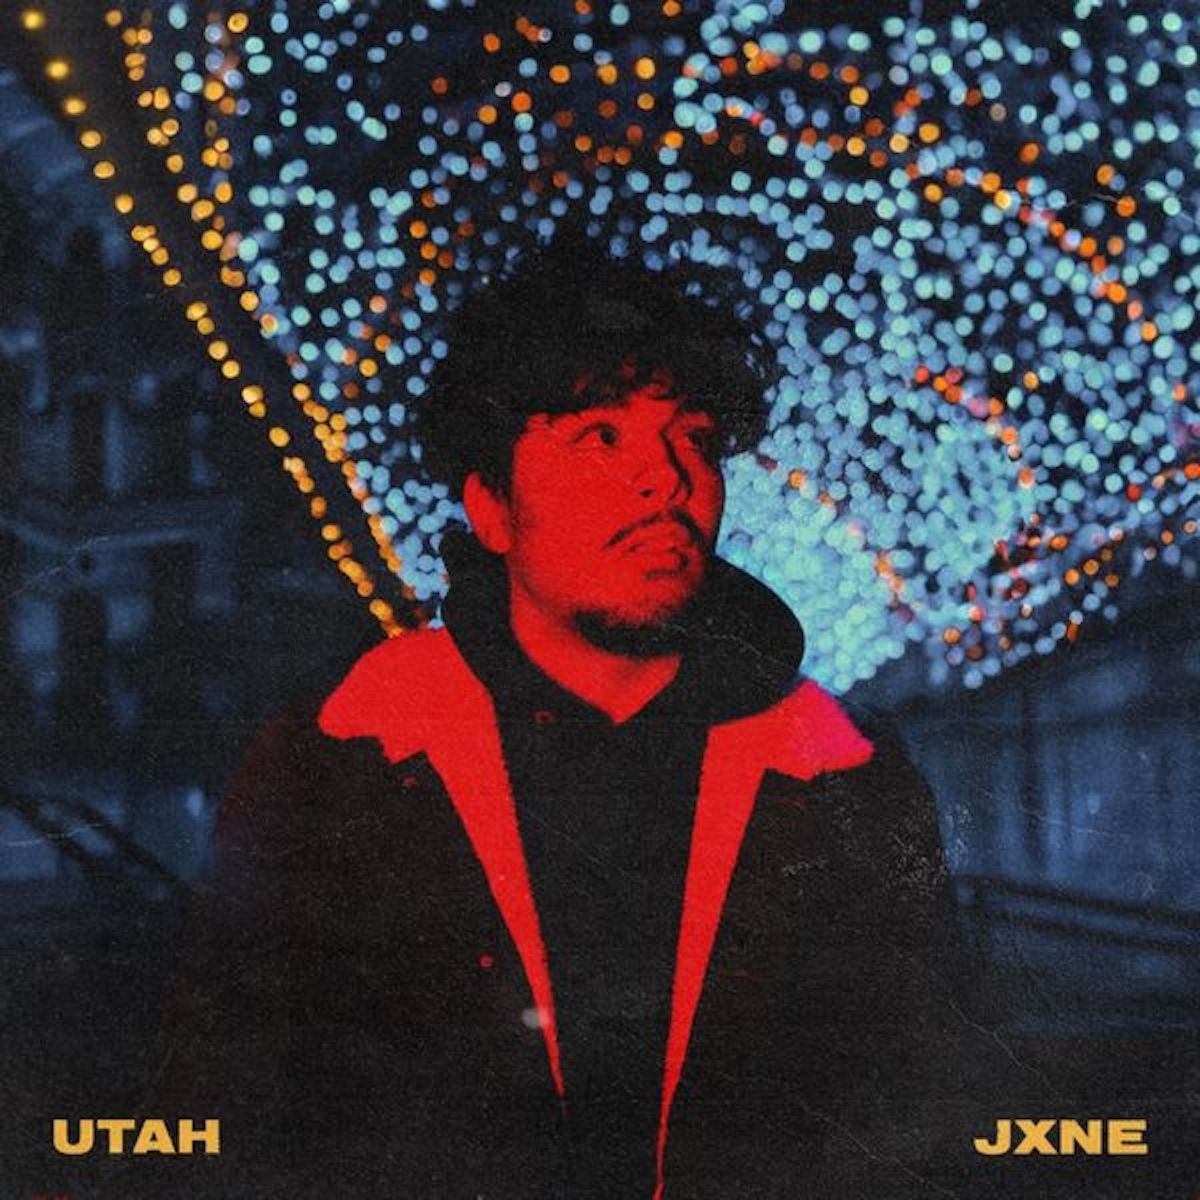 LISTEN: “Utah” by Jxne